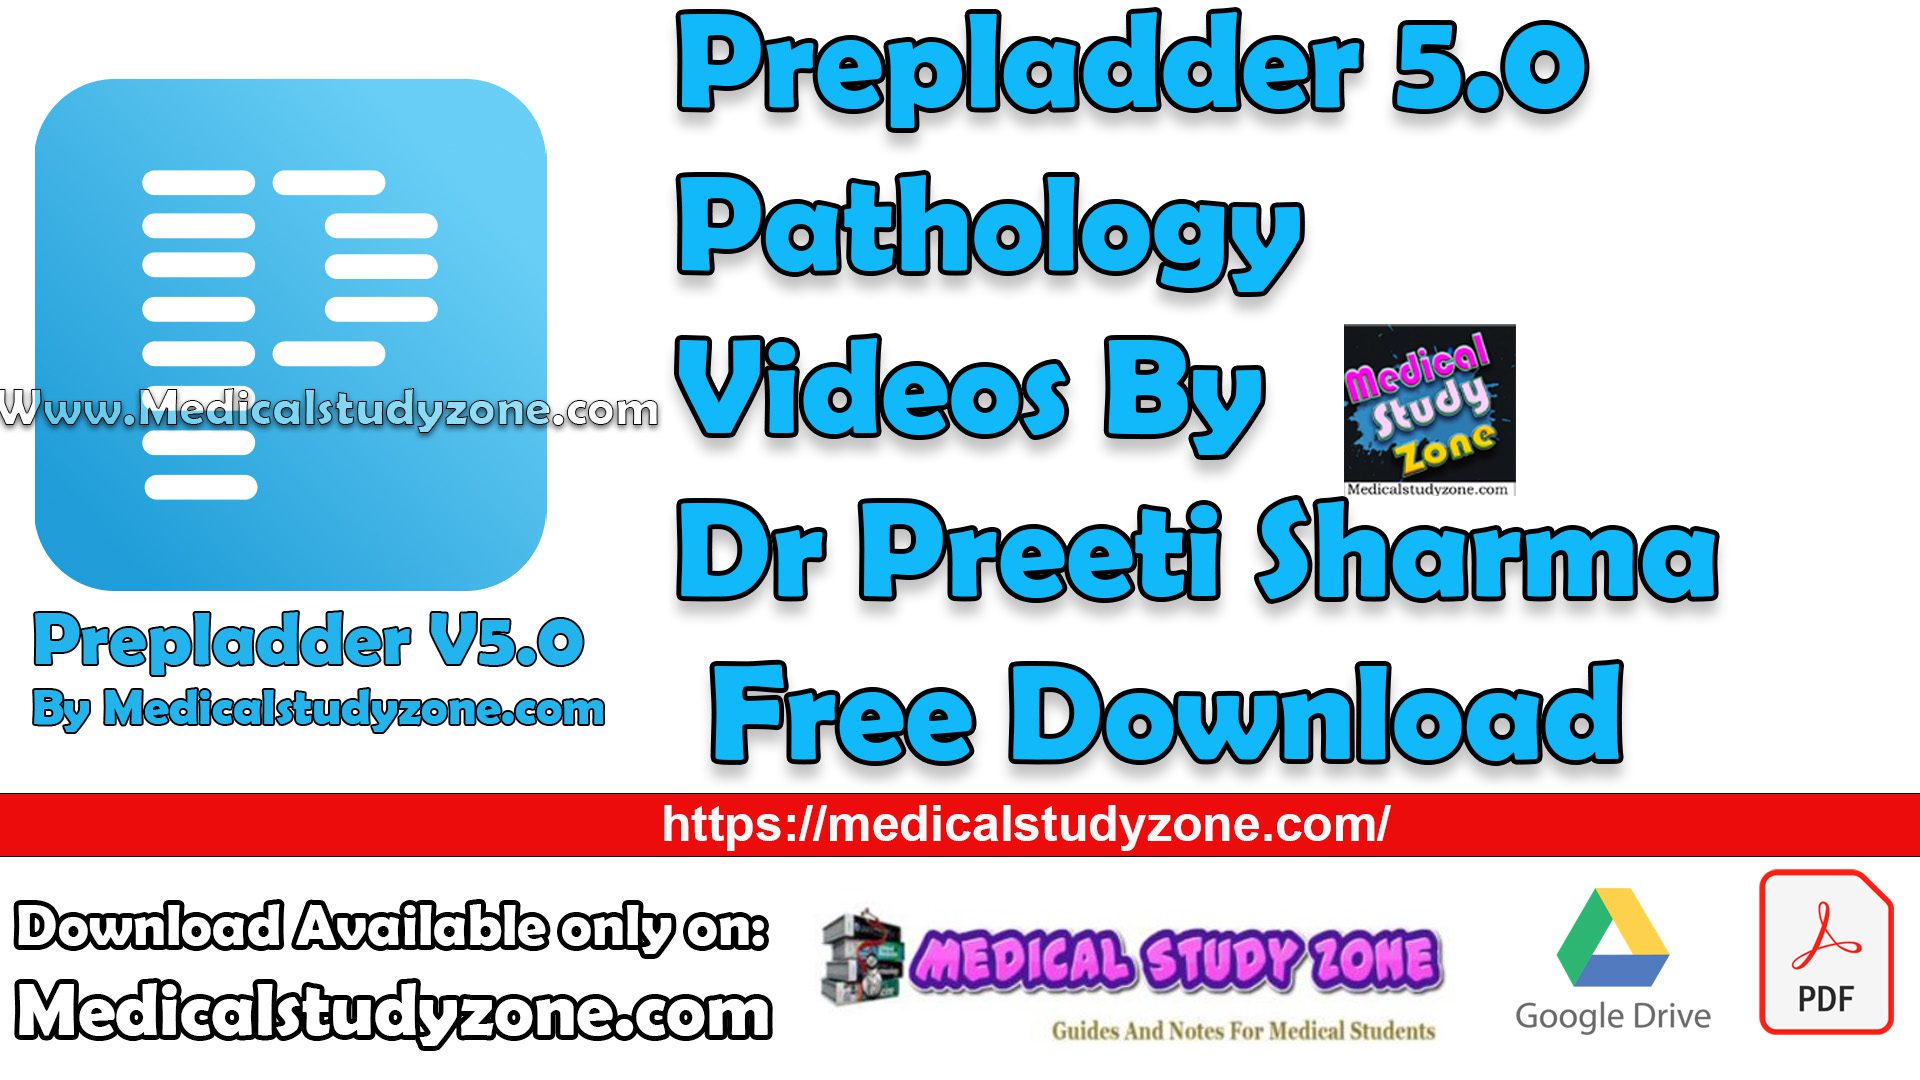 Prepladder 5.0 Pathology Videos By Dr Preeti Sharma Free Download